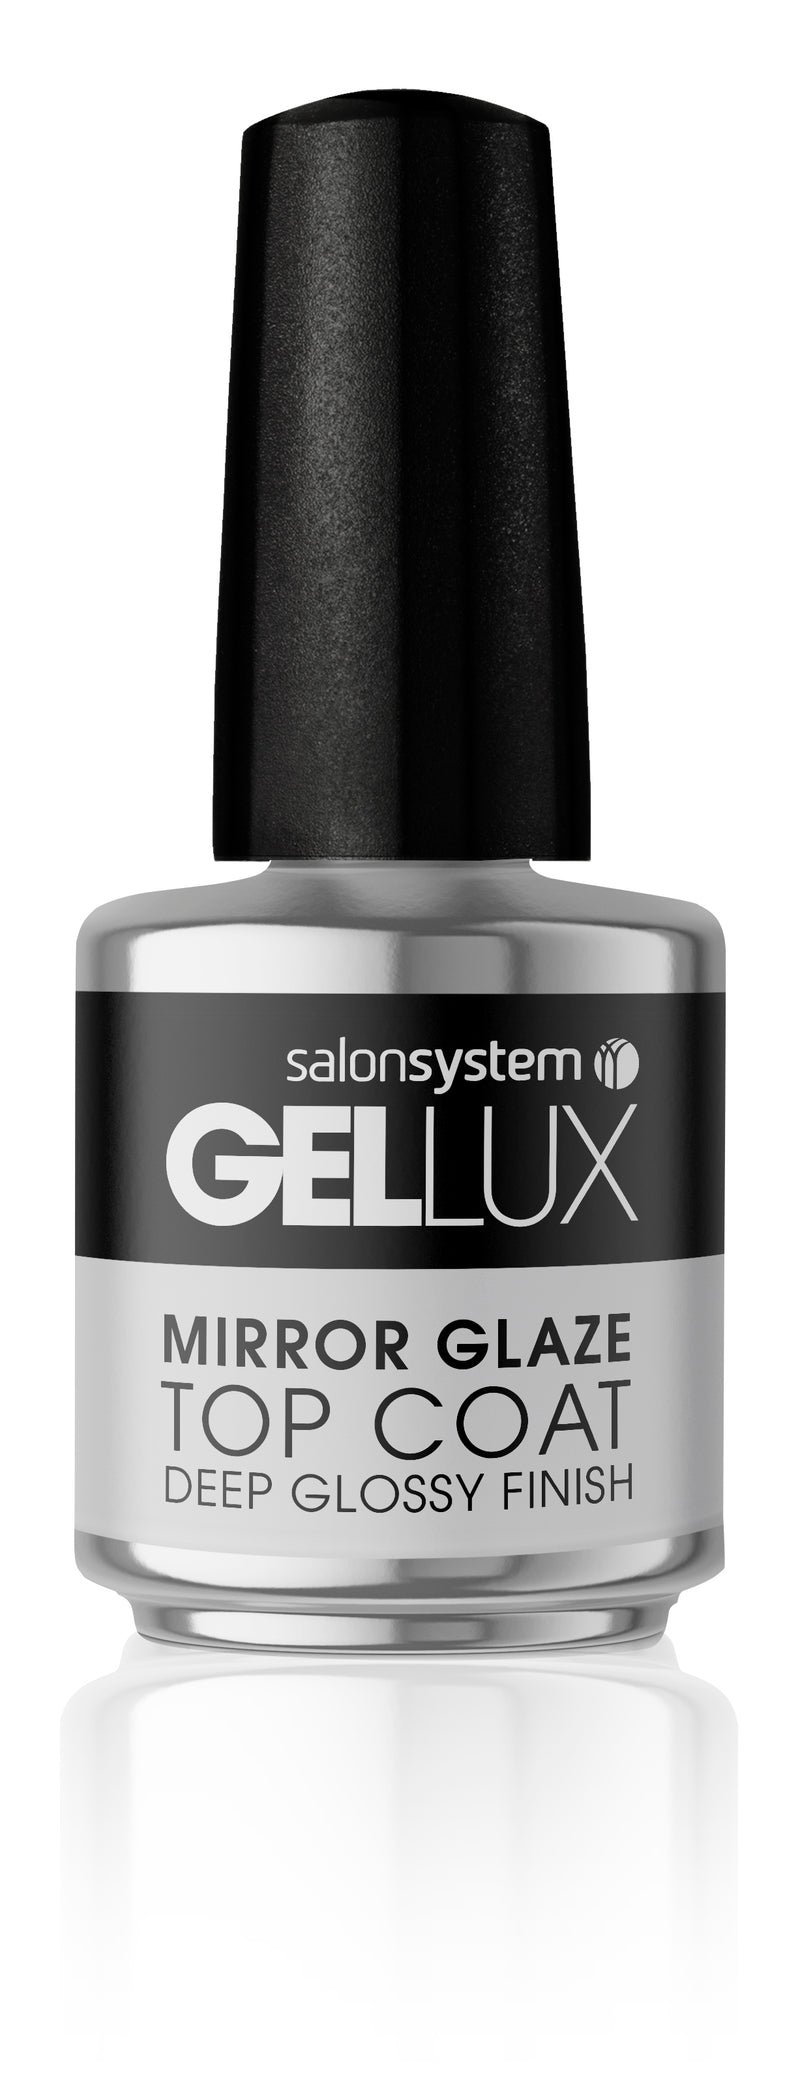 Gellux Mirror Glaze Top Coat 15ml